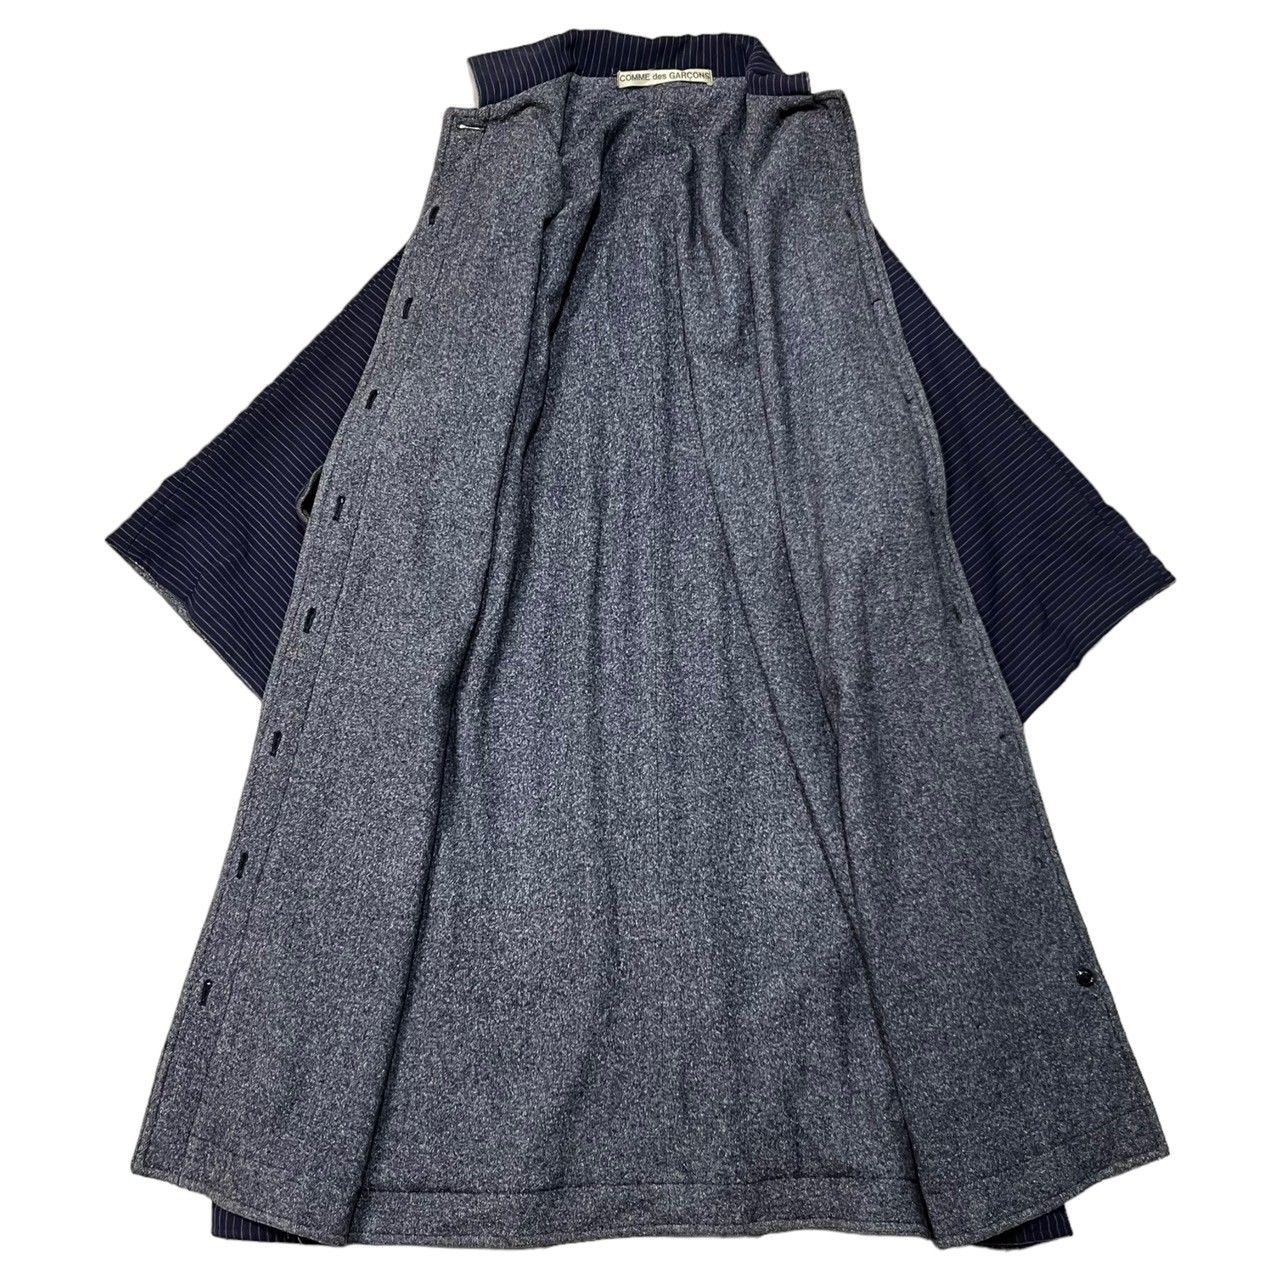 COMME des GARCONS(コムデギャルソン) 70~80's vintage kimono  coat/ヴィンテージ着物コート/70年代/80年代/最初期/川久保玲 SIZE FREE ネイビー×グレー AD表記無し 稀少品